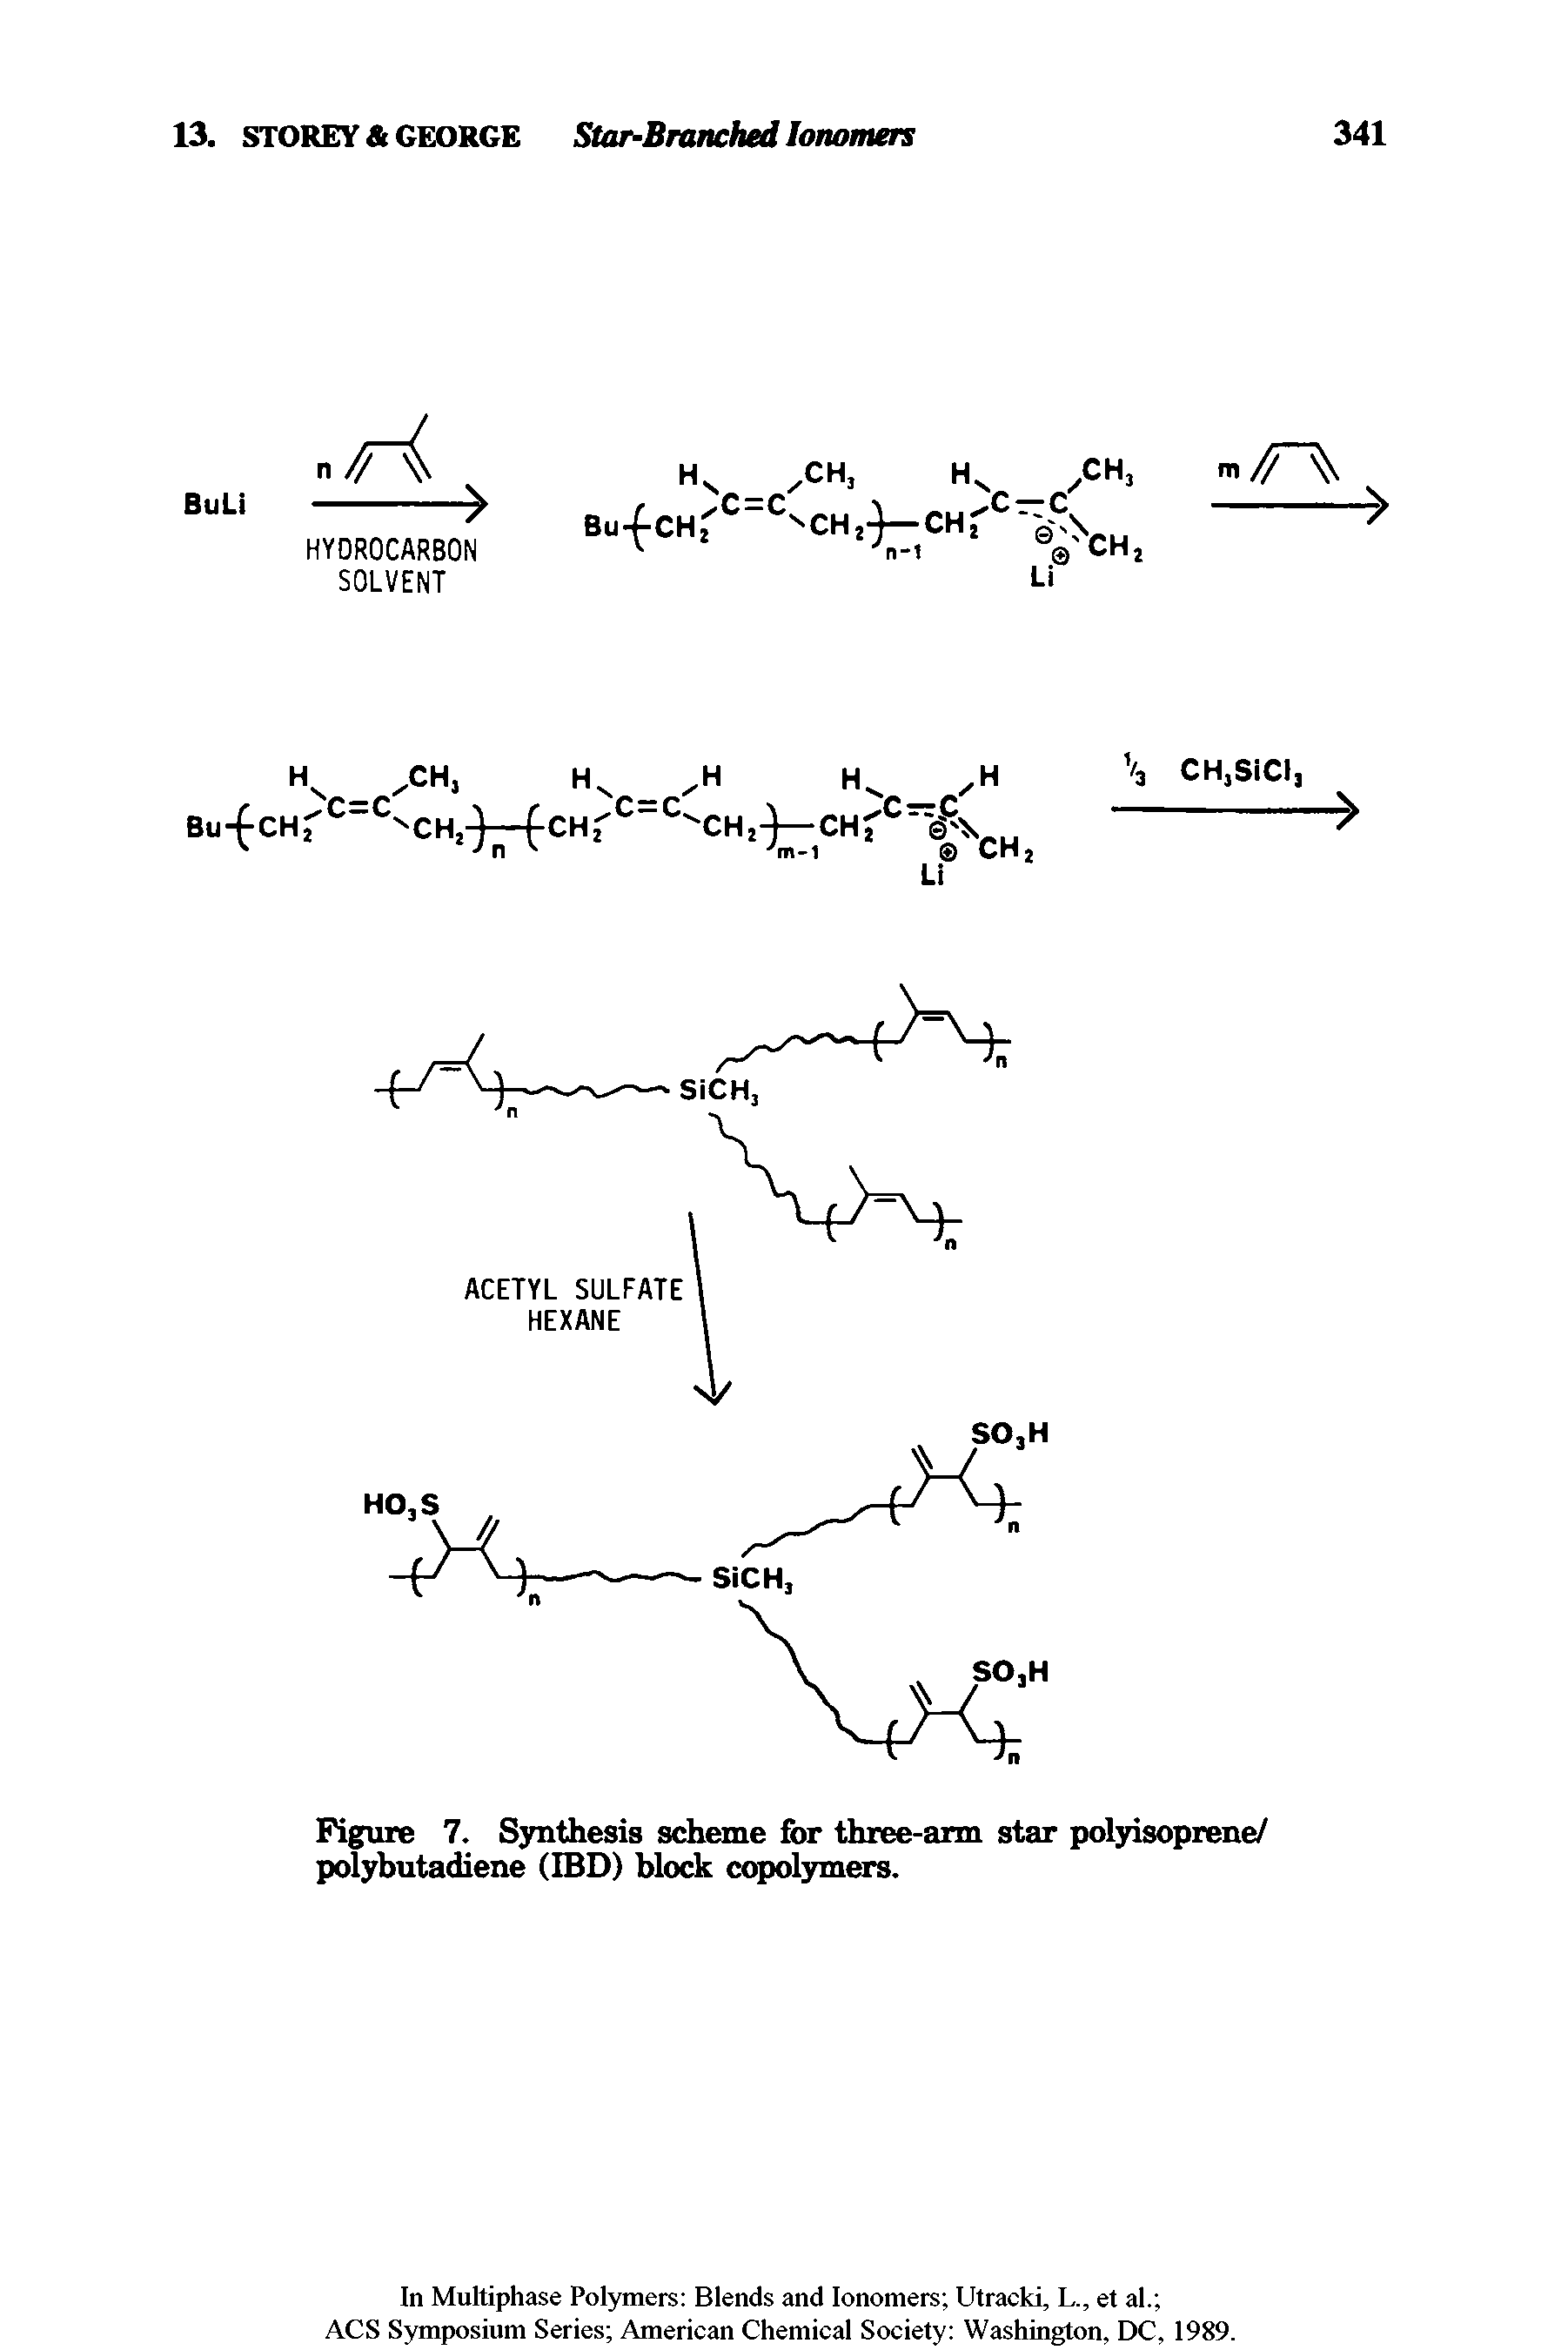 Figure 7. Synthesis scheme for three-arm star polyisoprene/ polybutadiene (IBD) block copolymers.